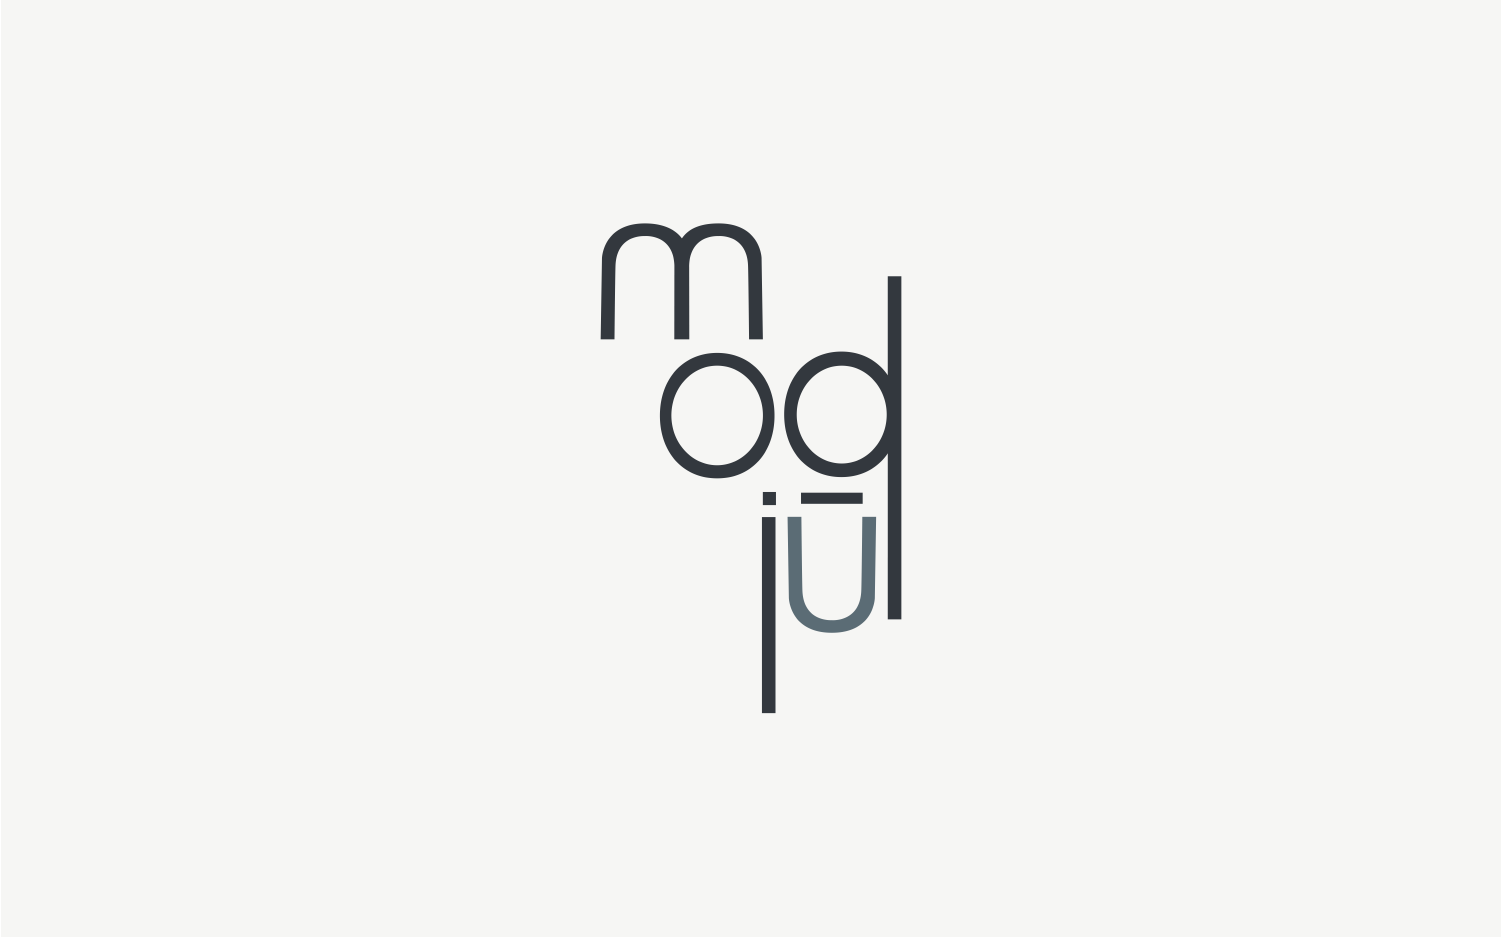 A logo design for a leather bag company called Modjūl.